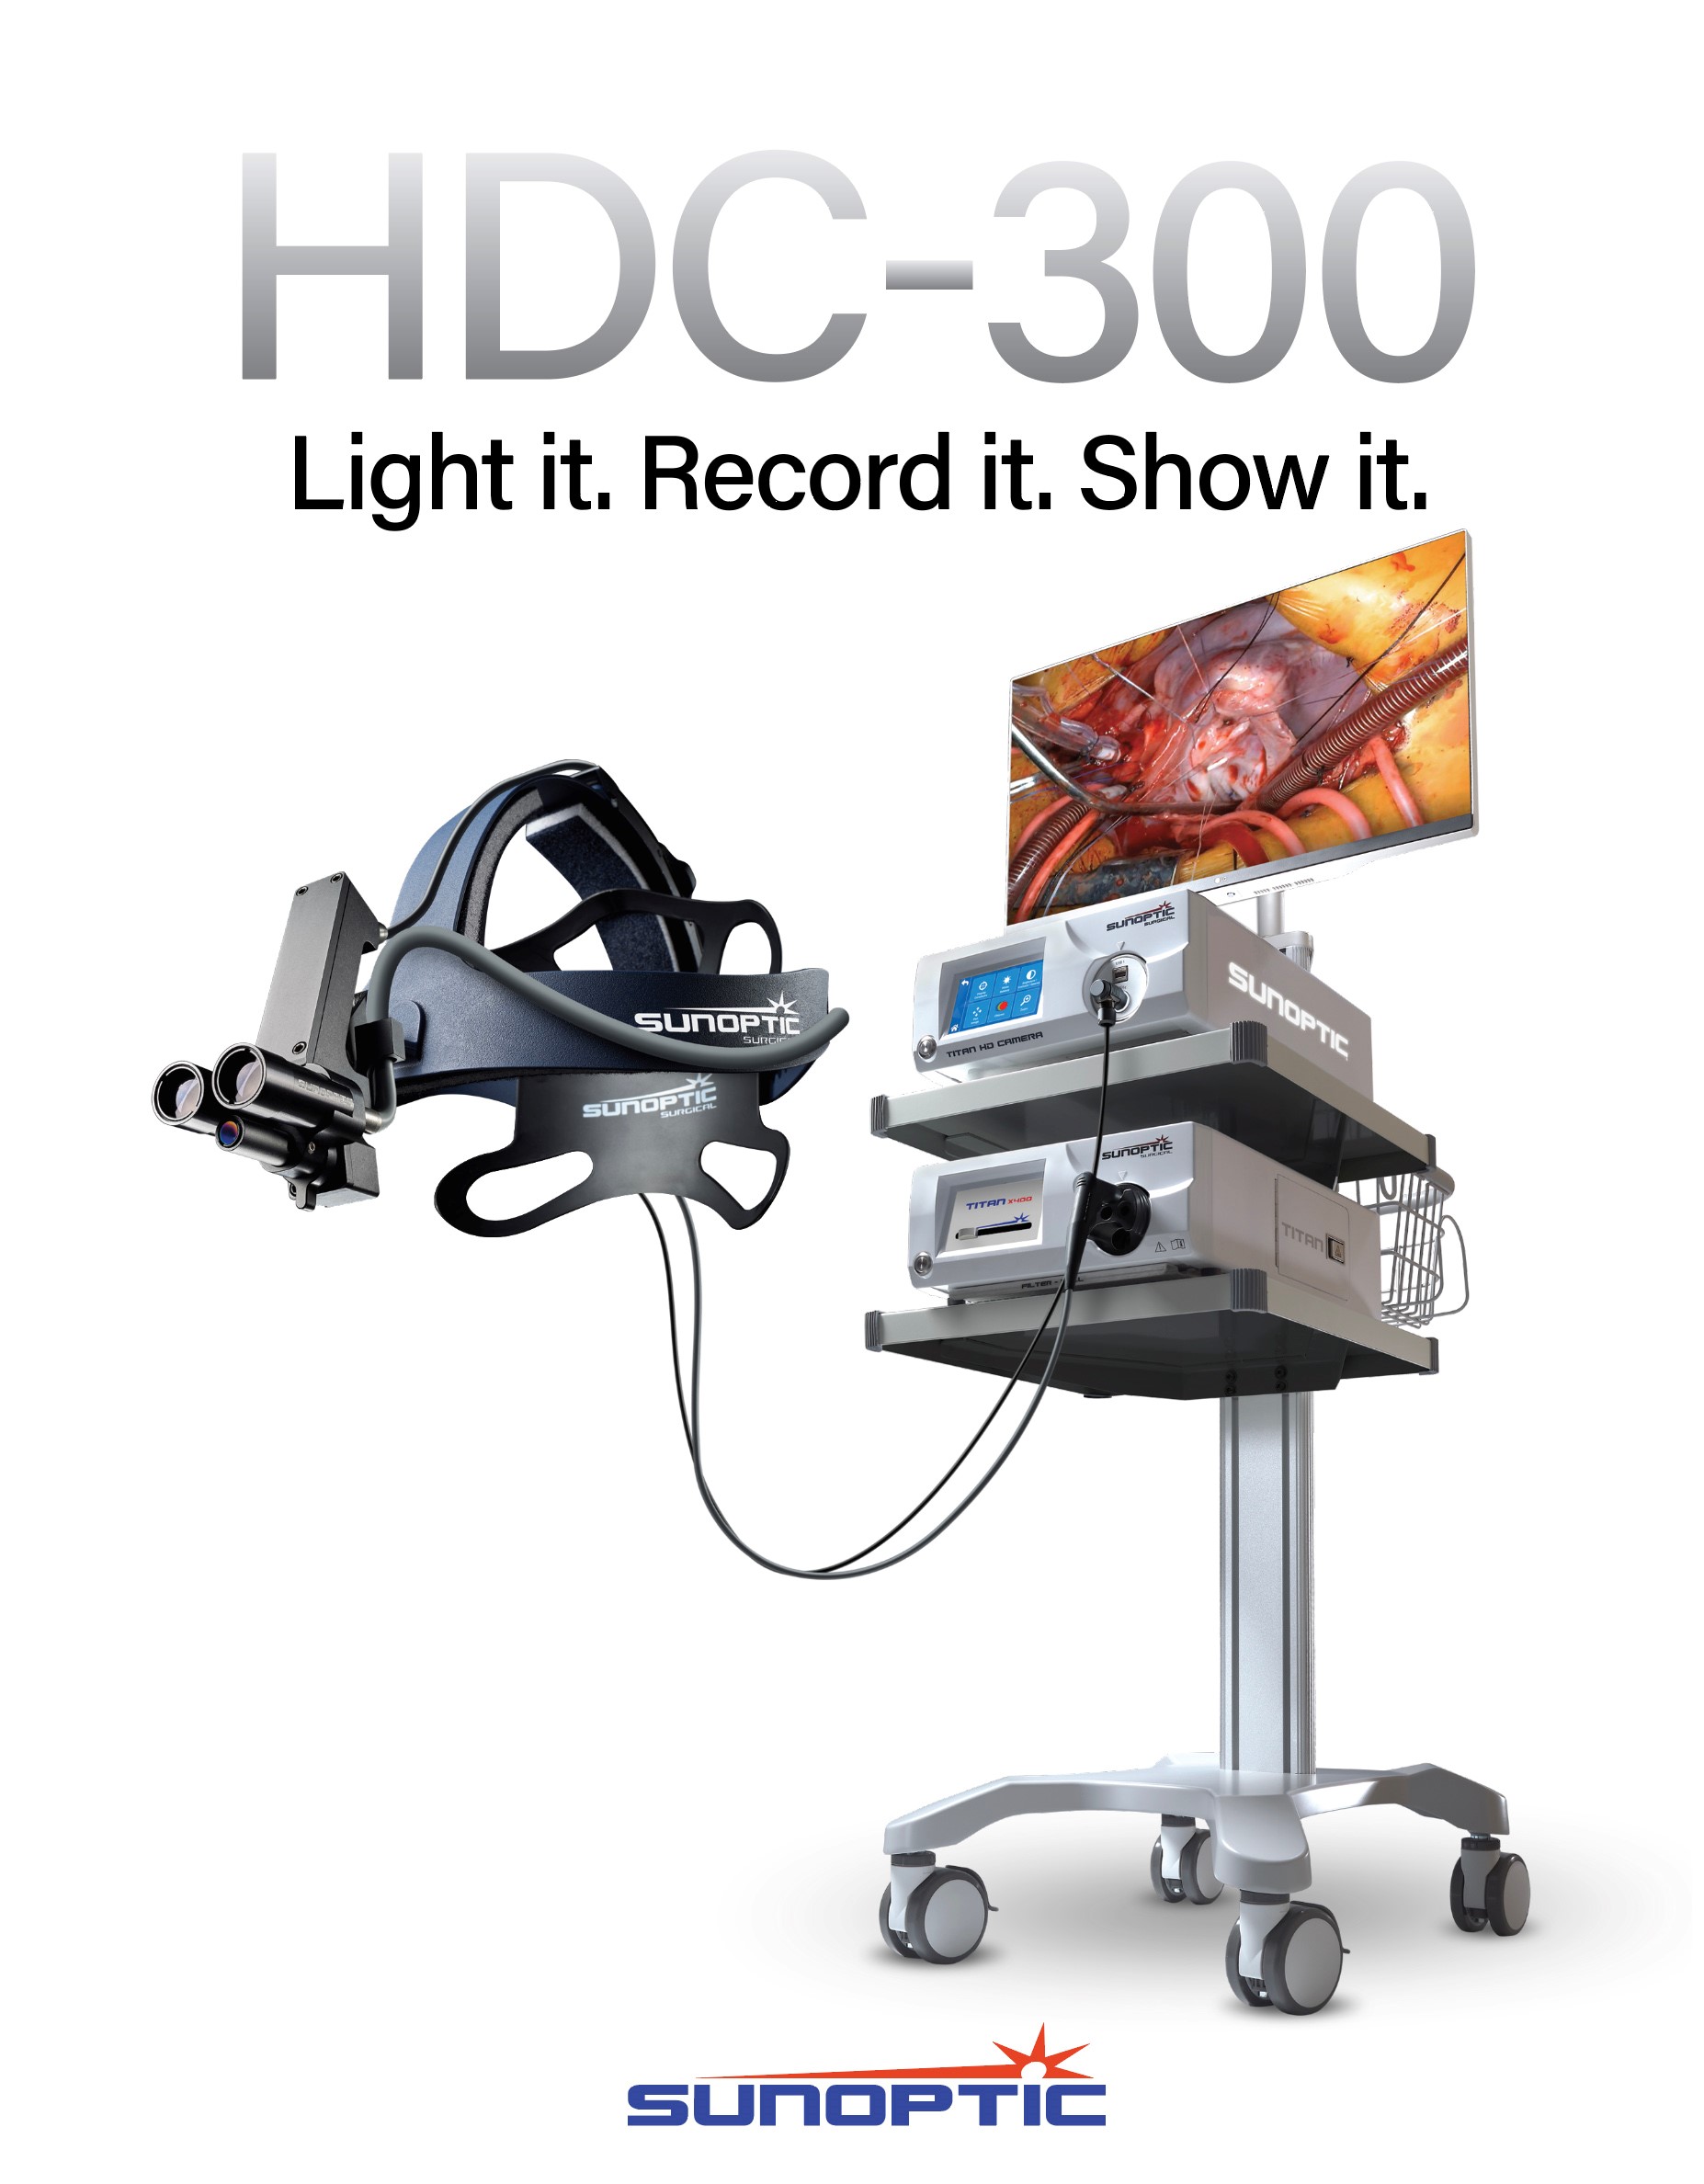 Sunoptic HD Camera Headlight System for Surgery Brochure